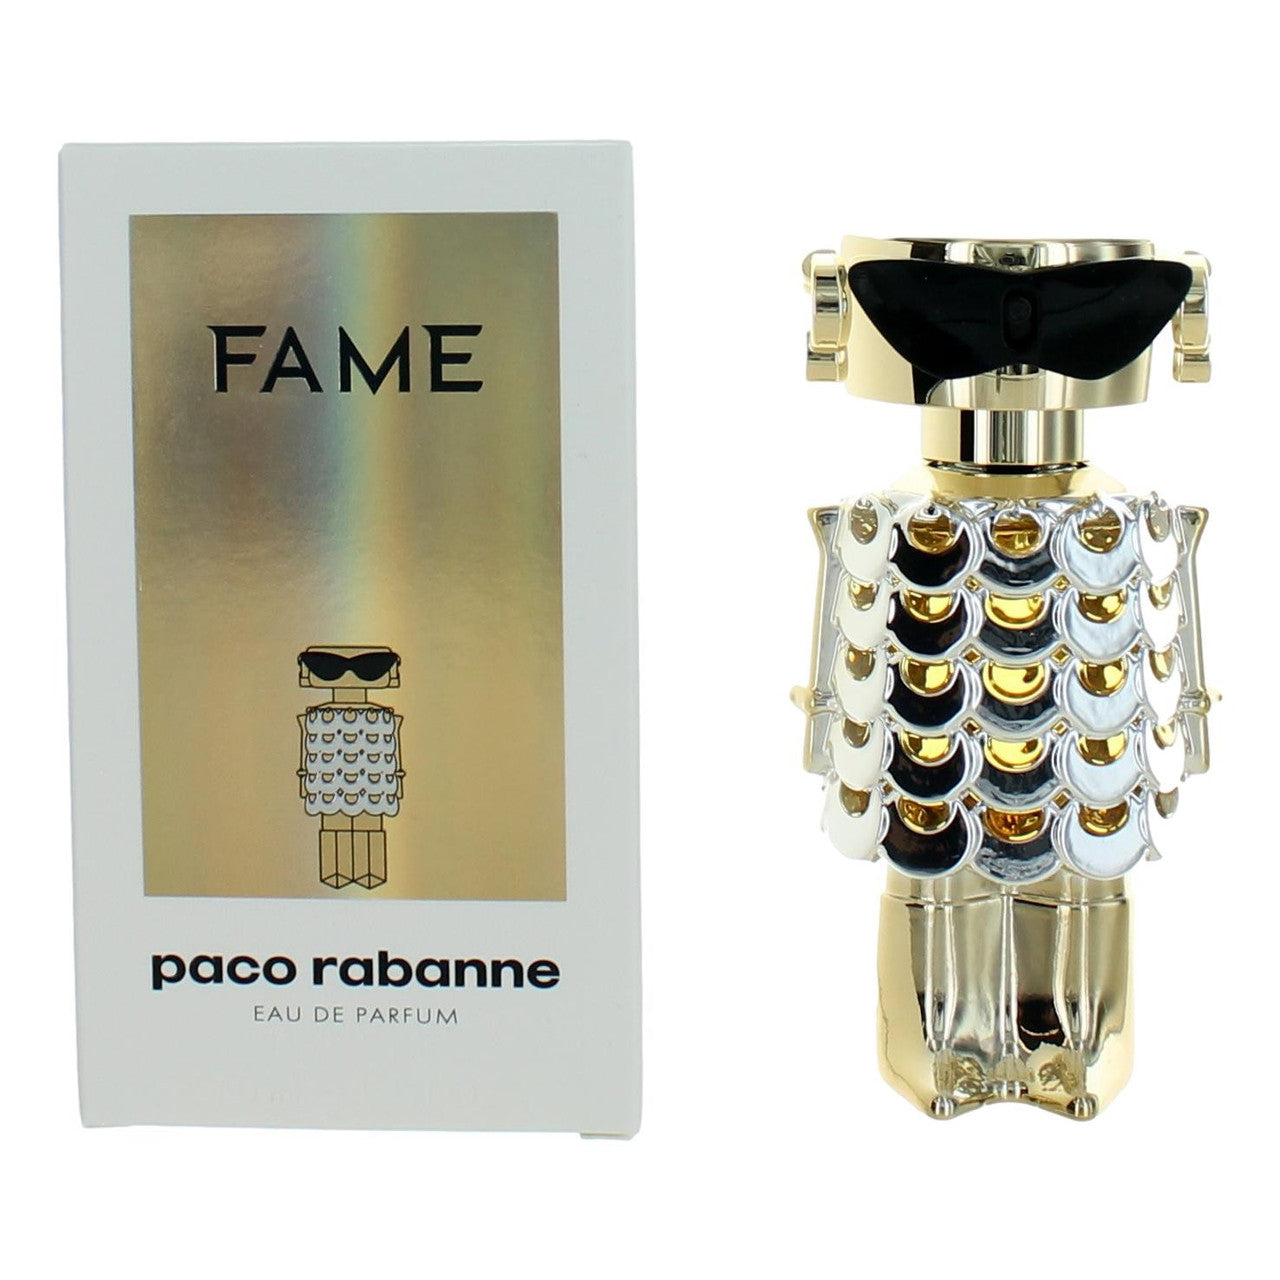 Fame by Paco Rabanne, 1.7 oz EDP Spray